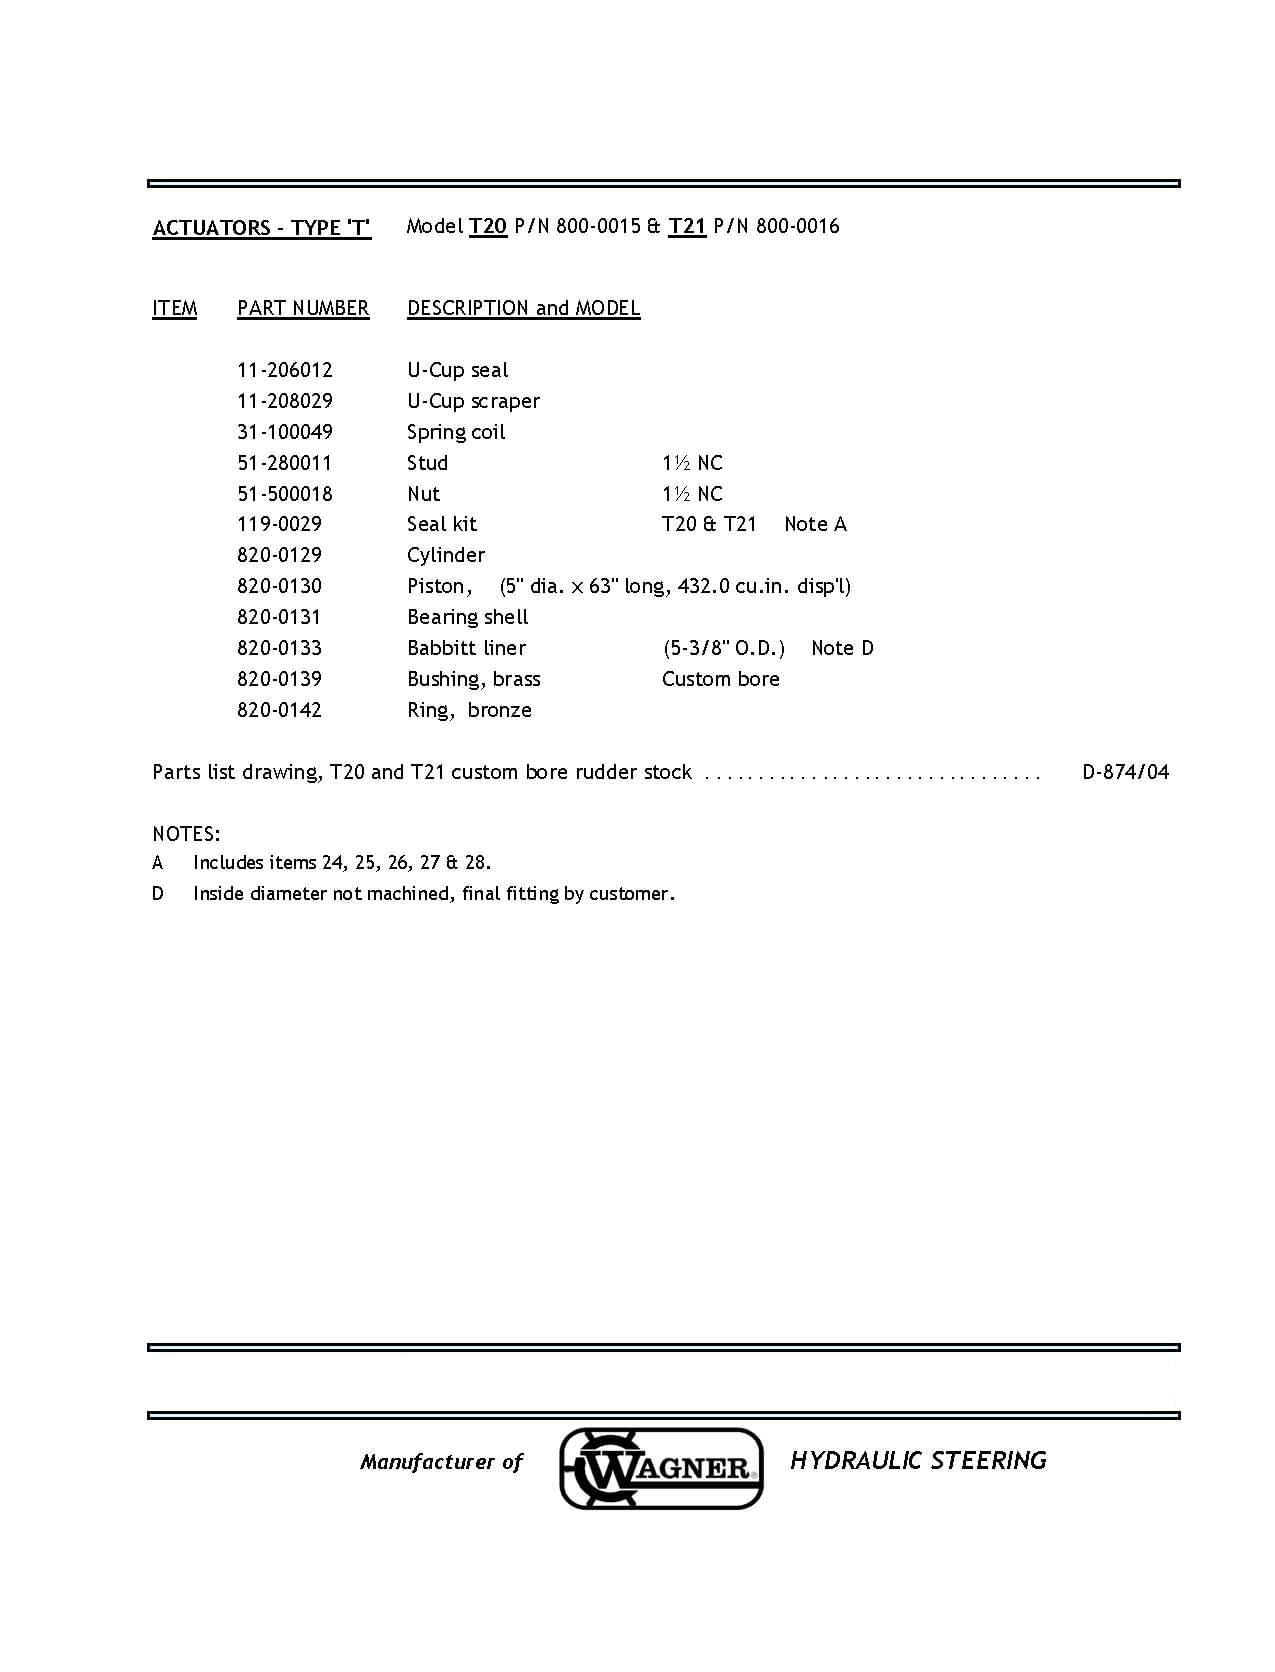 Model T20 & T21 Assembly Parts List